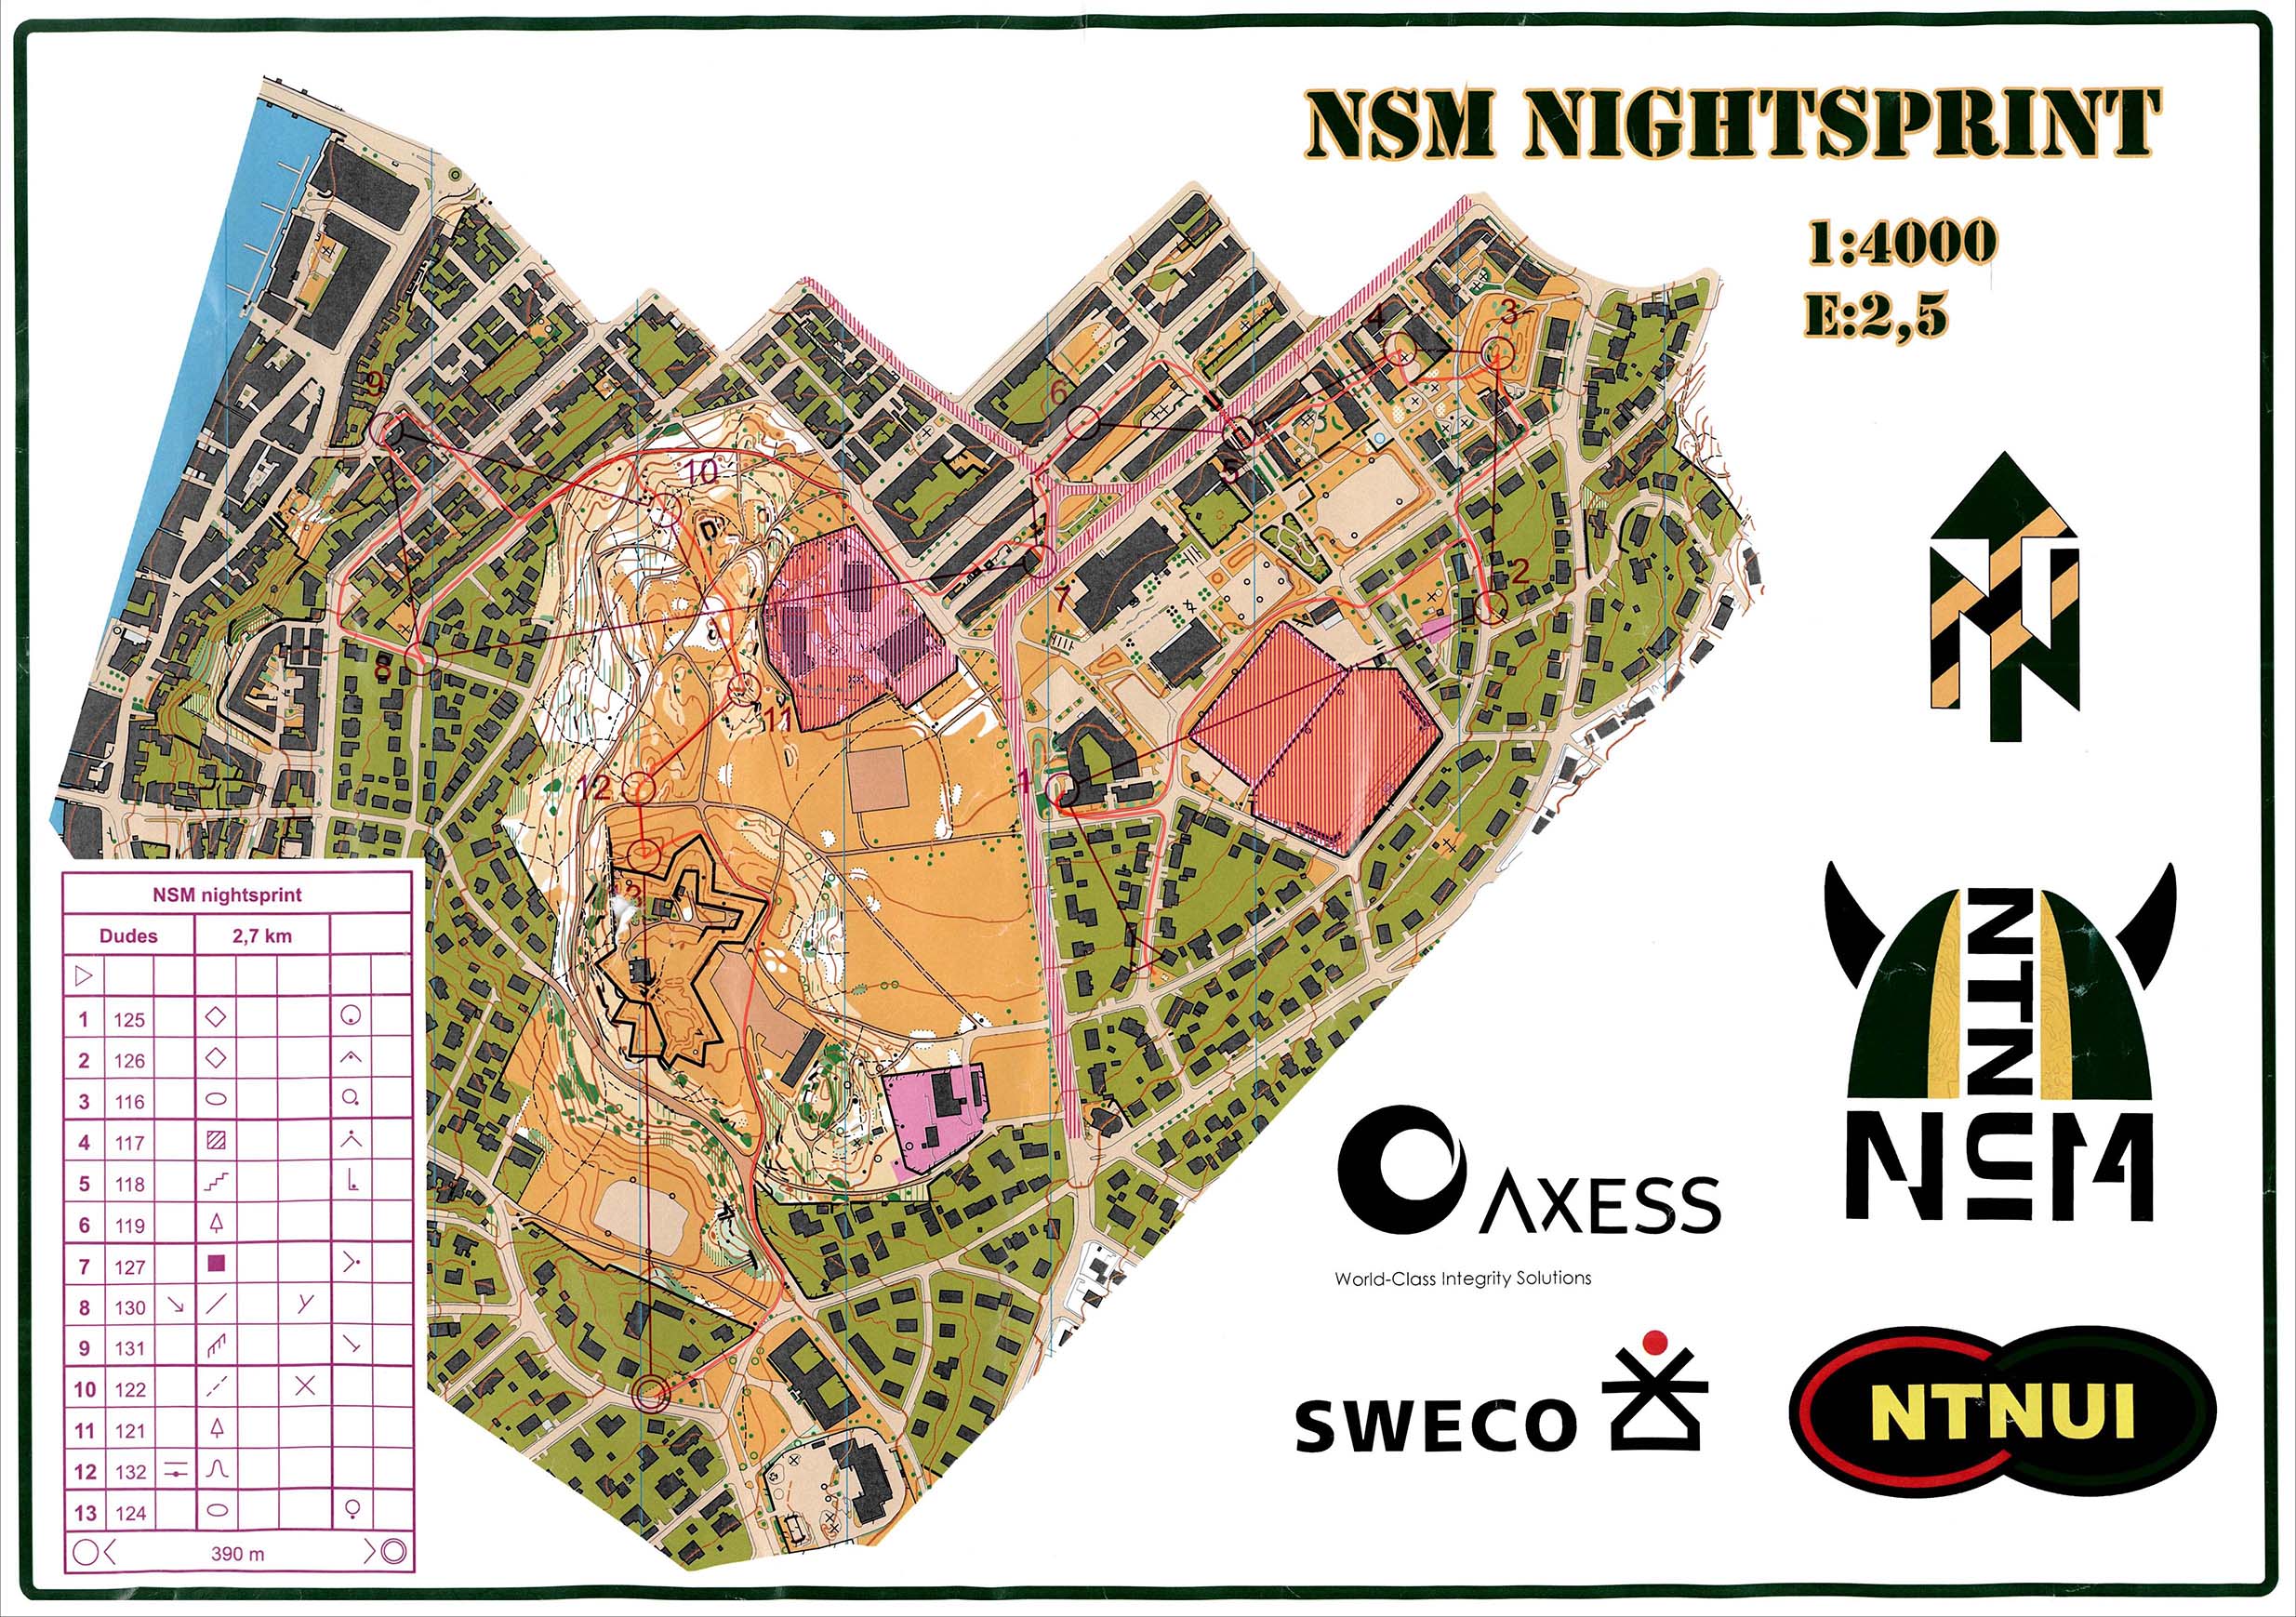 NSM Night sprint (31/10/2014)